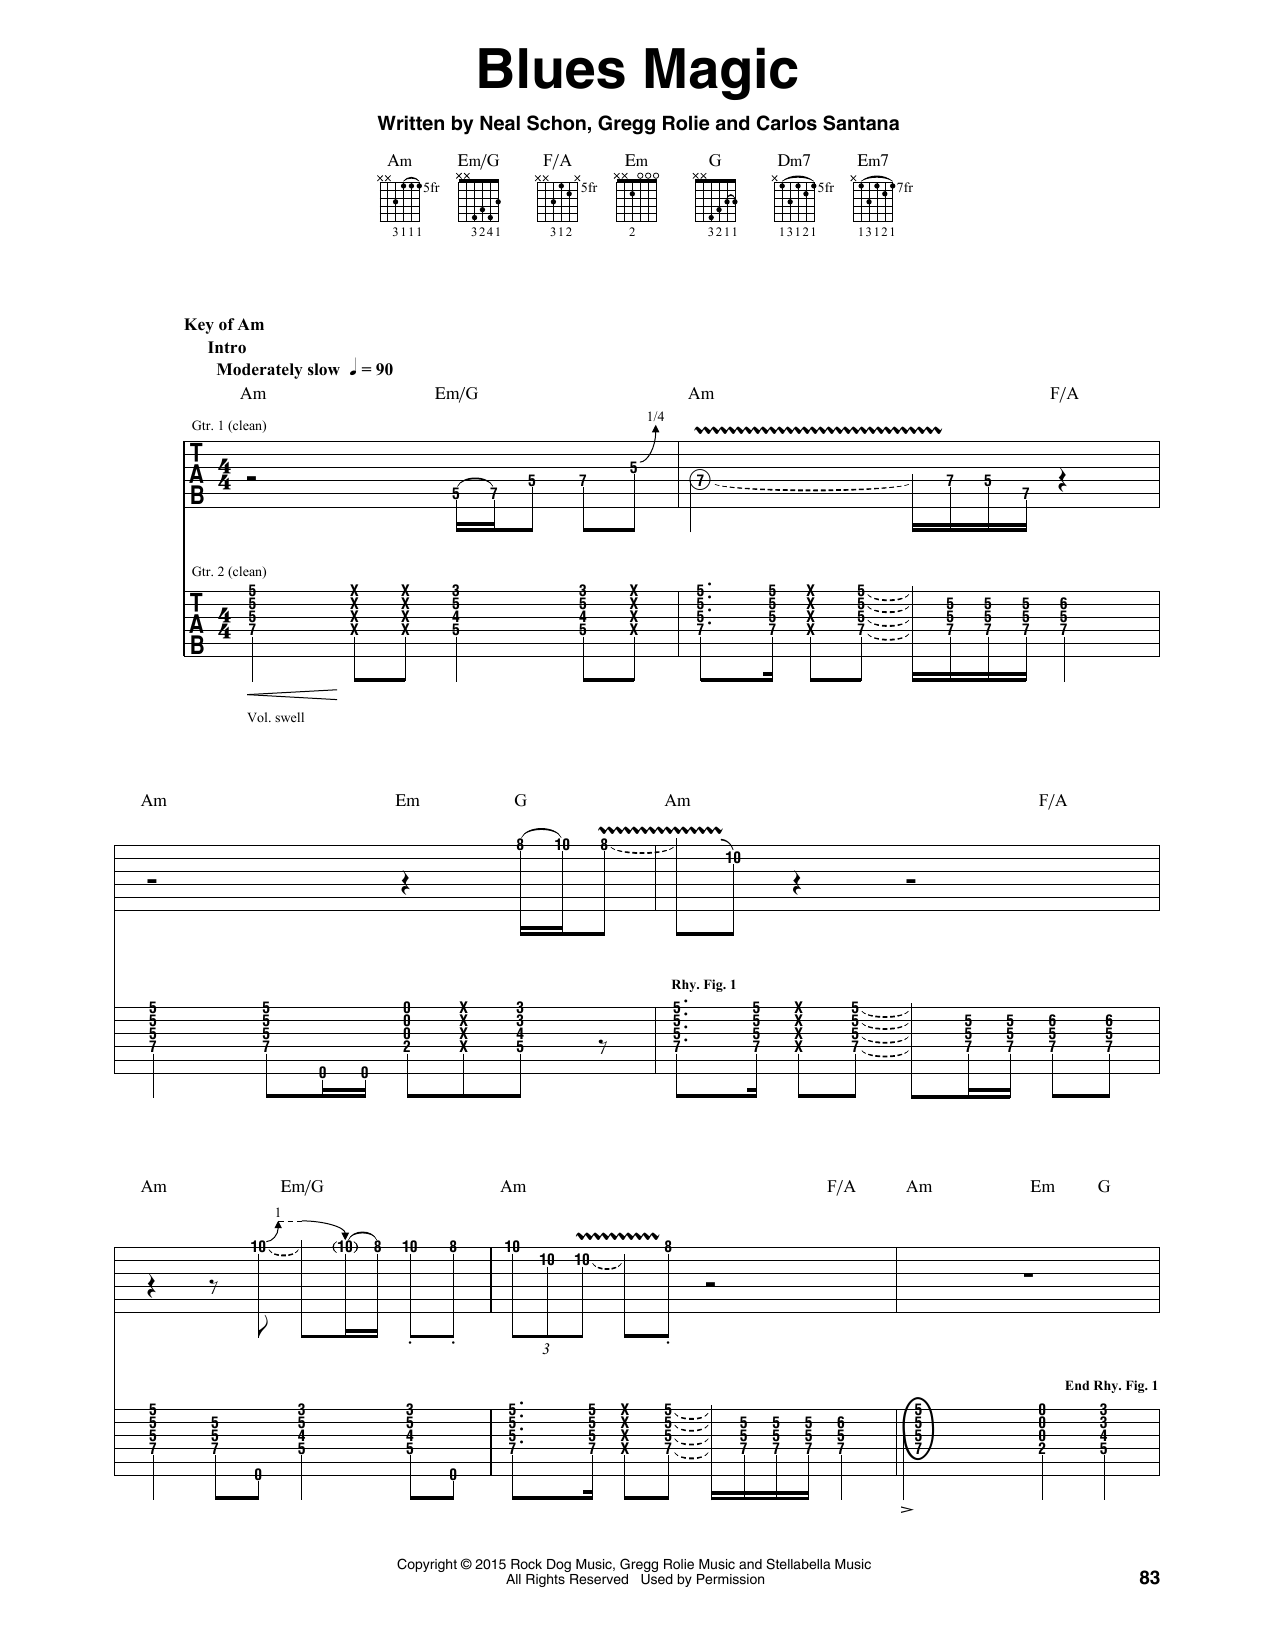 Santana Blues Magic Sheet Music Notes & Chords for Guitar Tab - Download or Print PDF